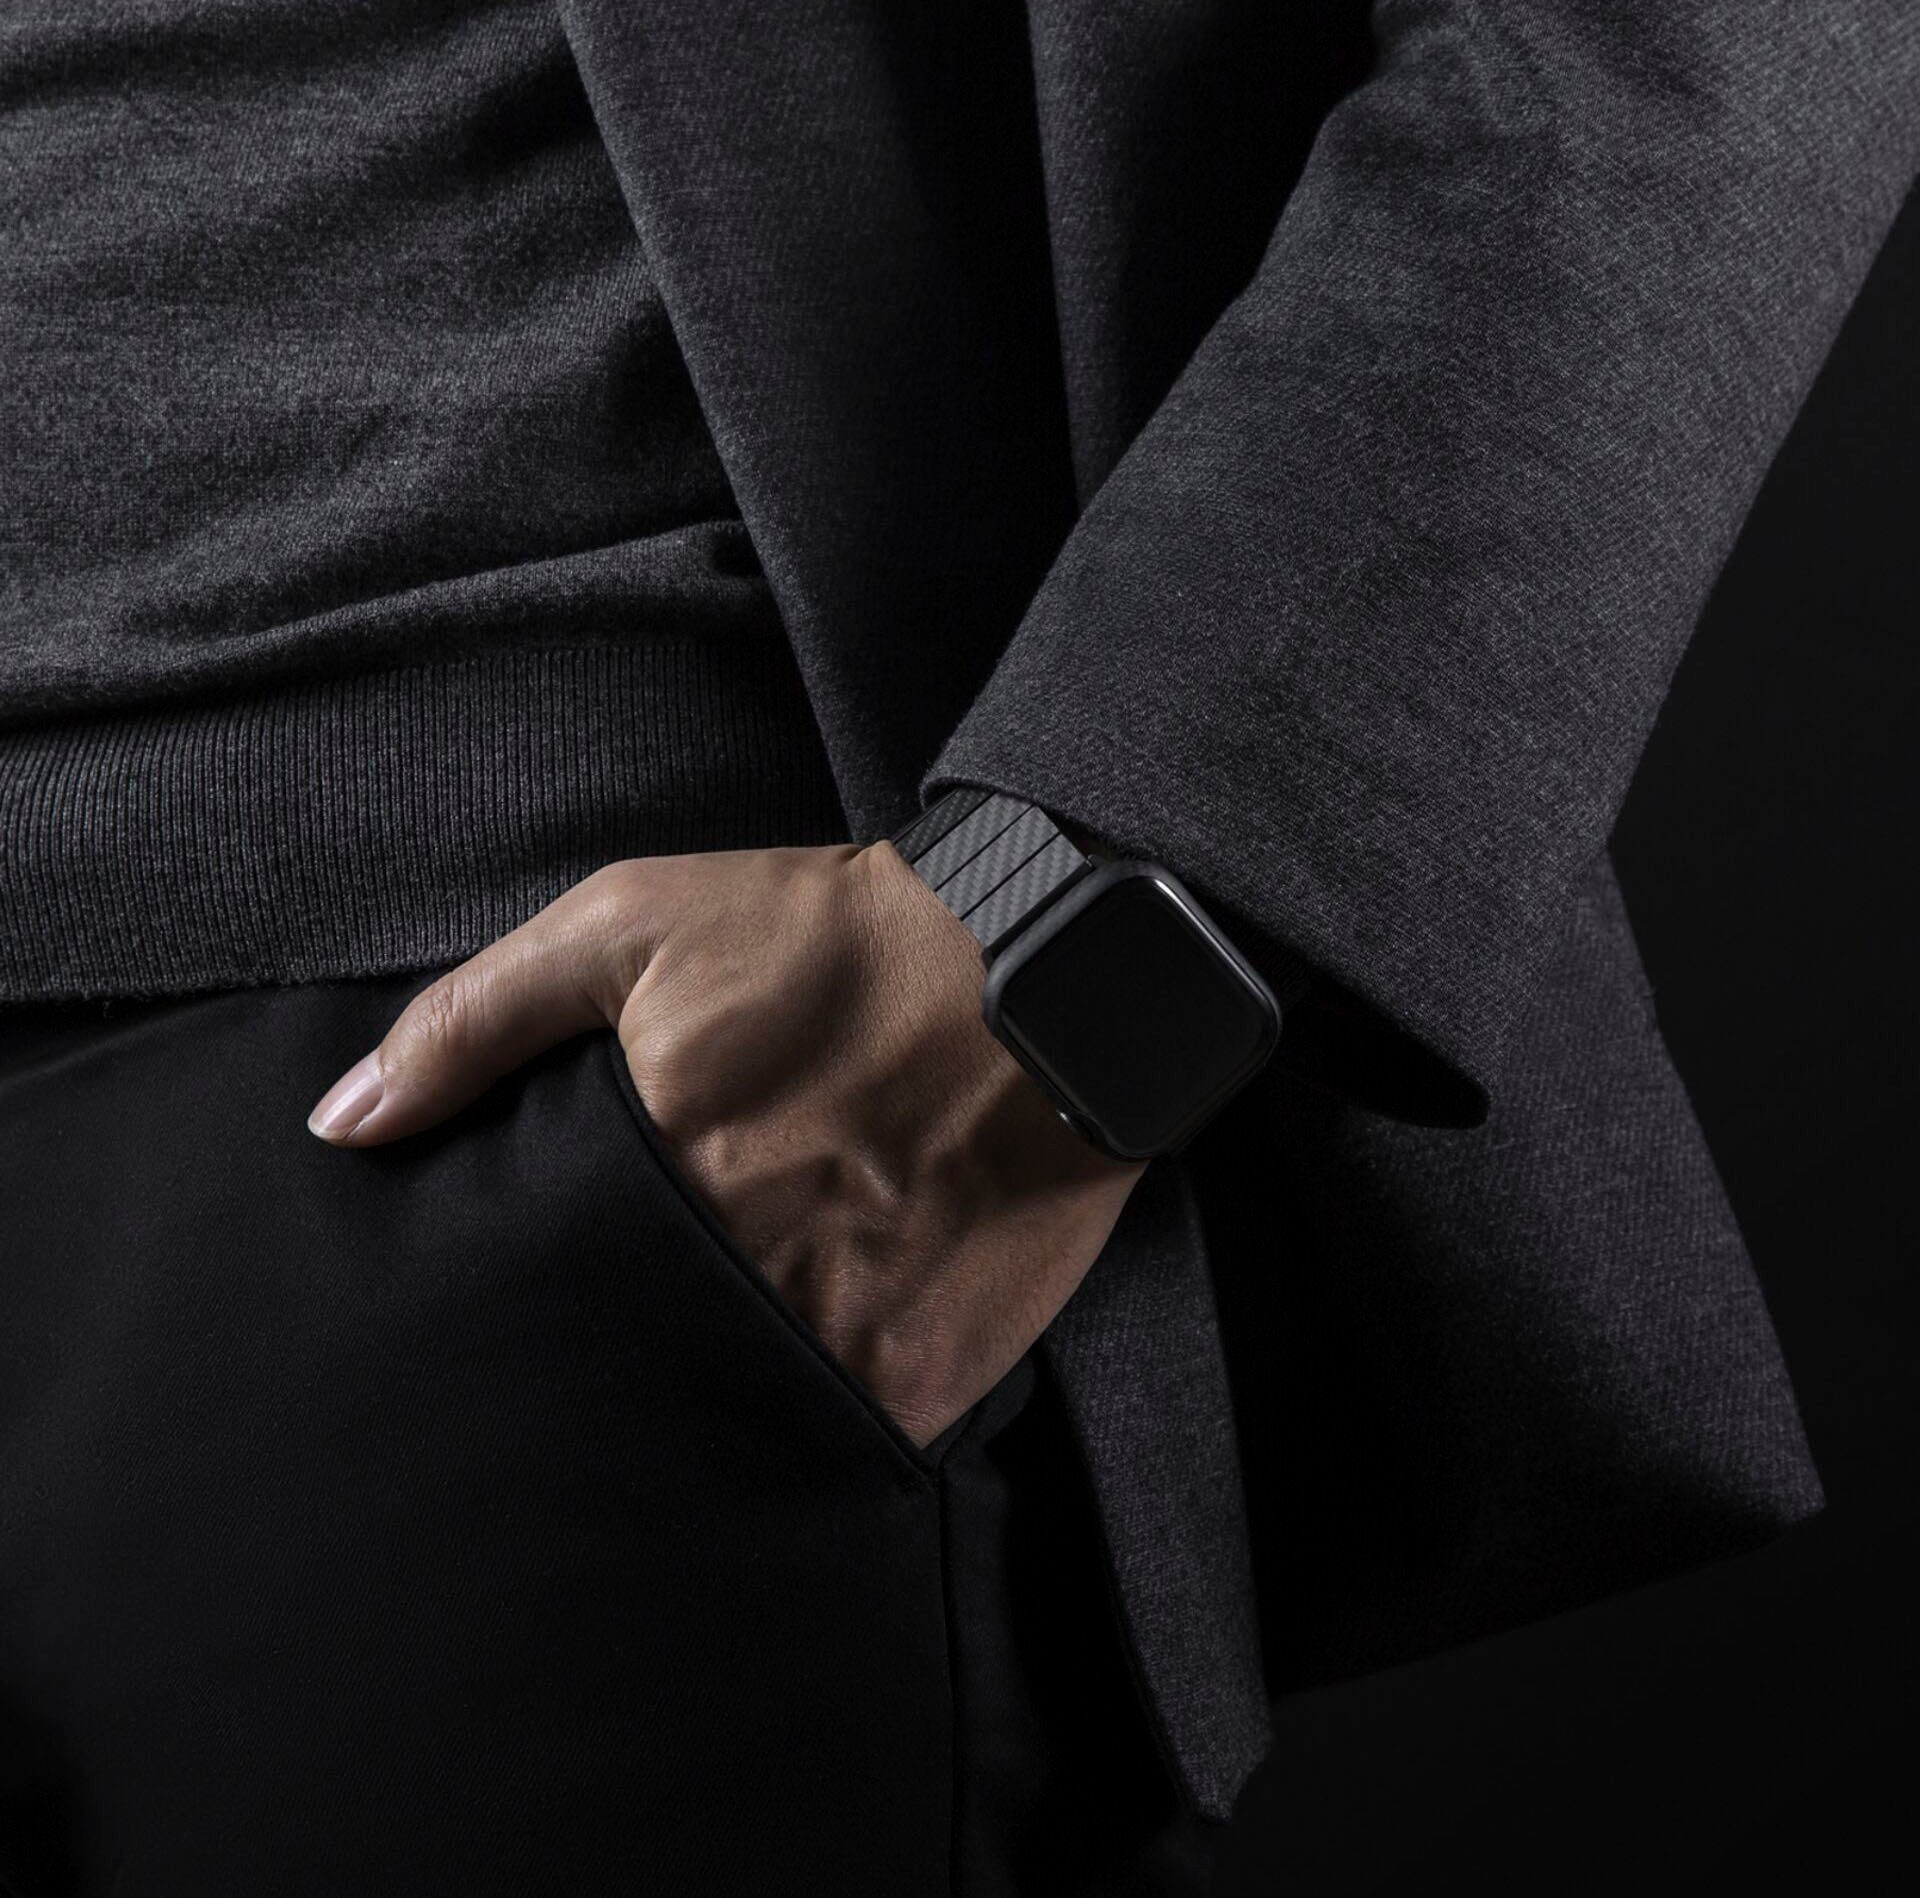 42-44mm Carbon Band Modern Fiber Link Pitaka Smartwatch-Armband Bracelet